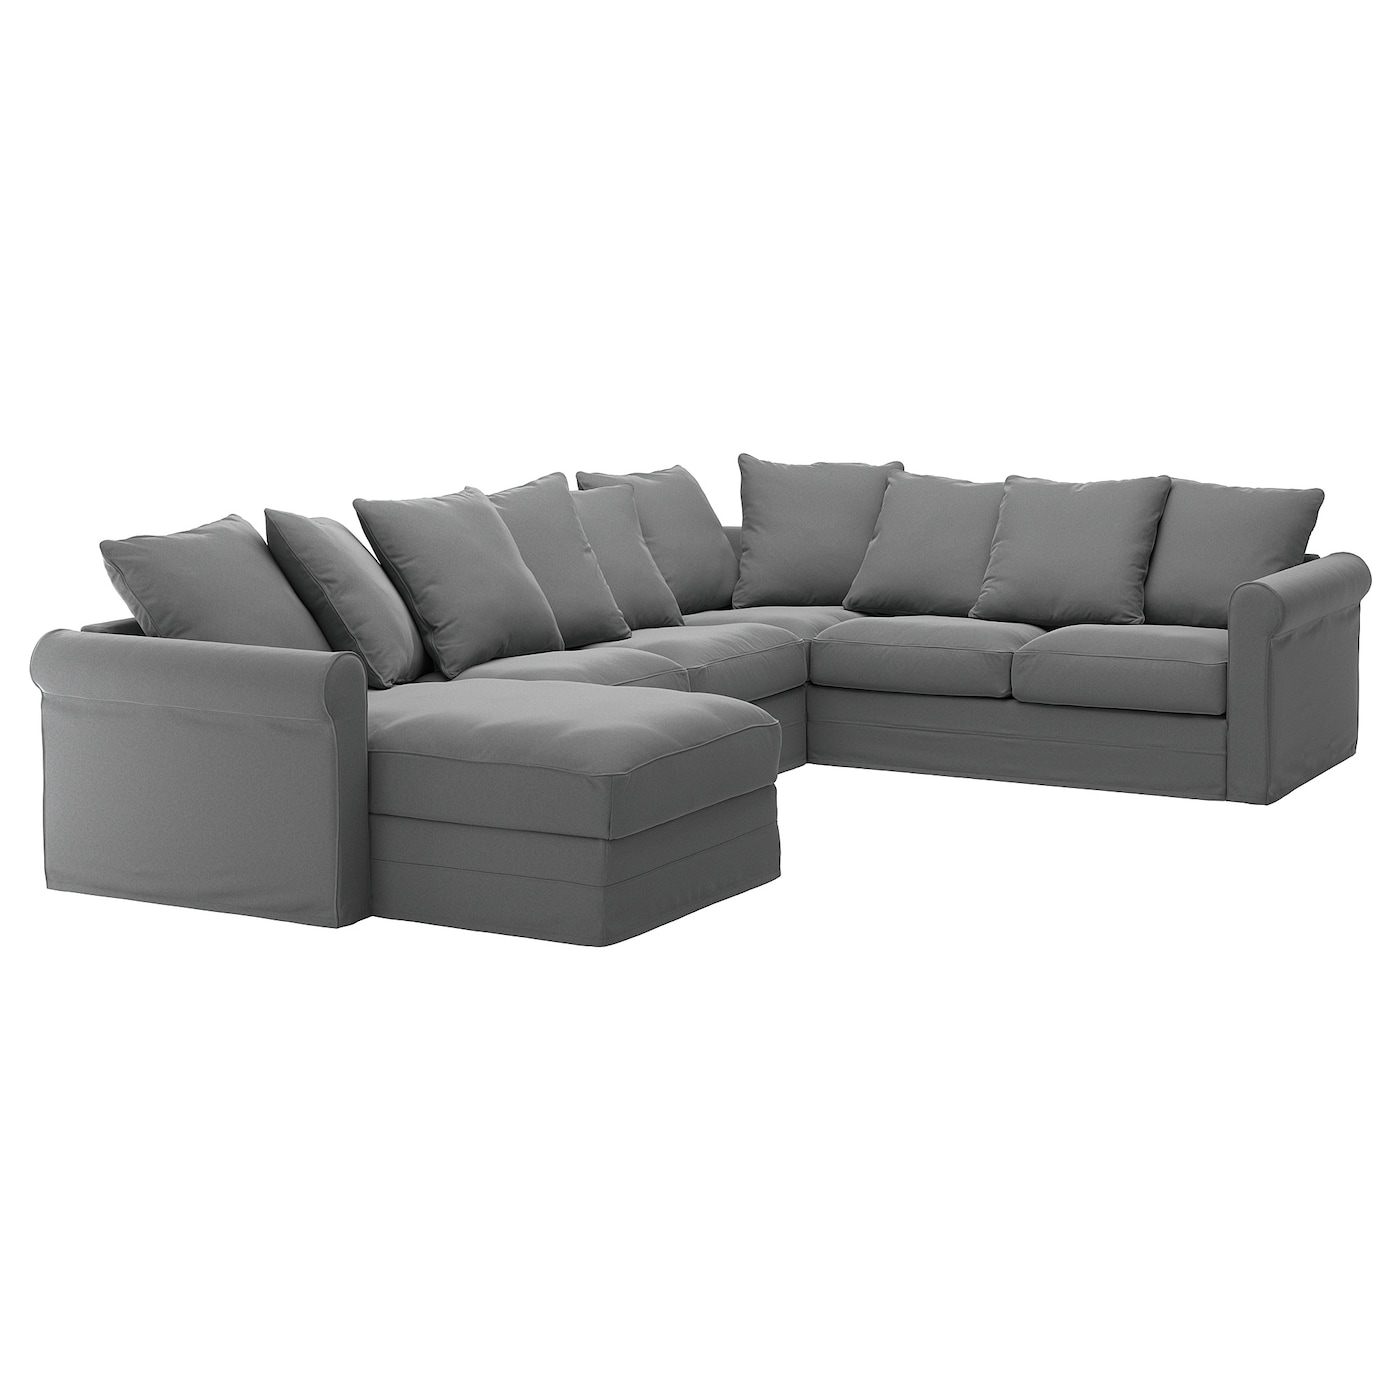 ГРЁНЛИД Диван угловой, 5-местный. диван+диван, Люнген средний серый GRÖNLID IKEA диван диван ру викс textile light